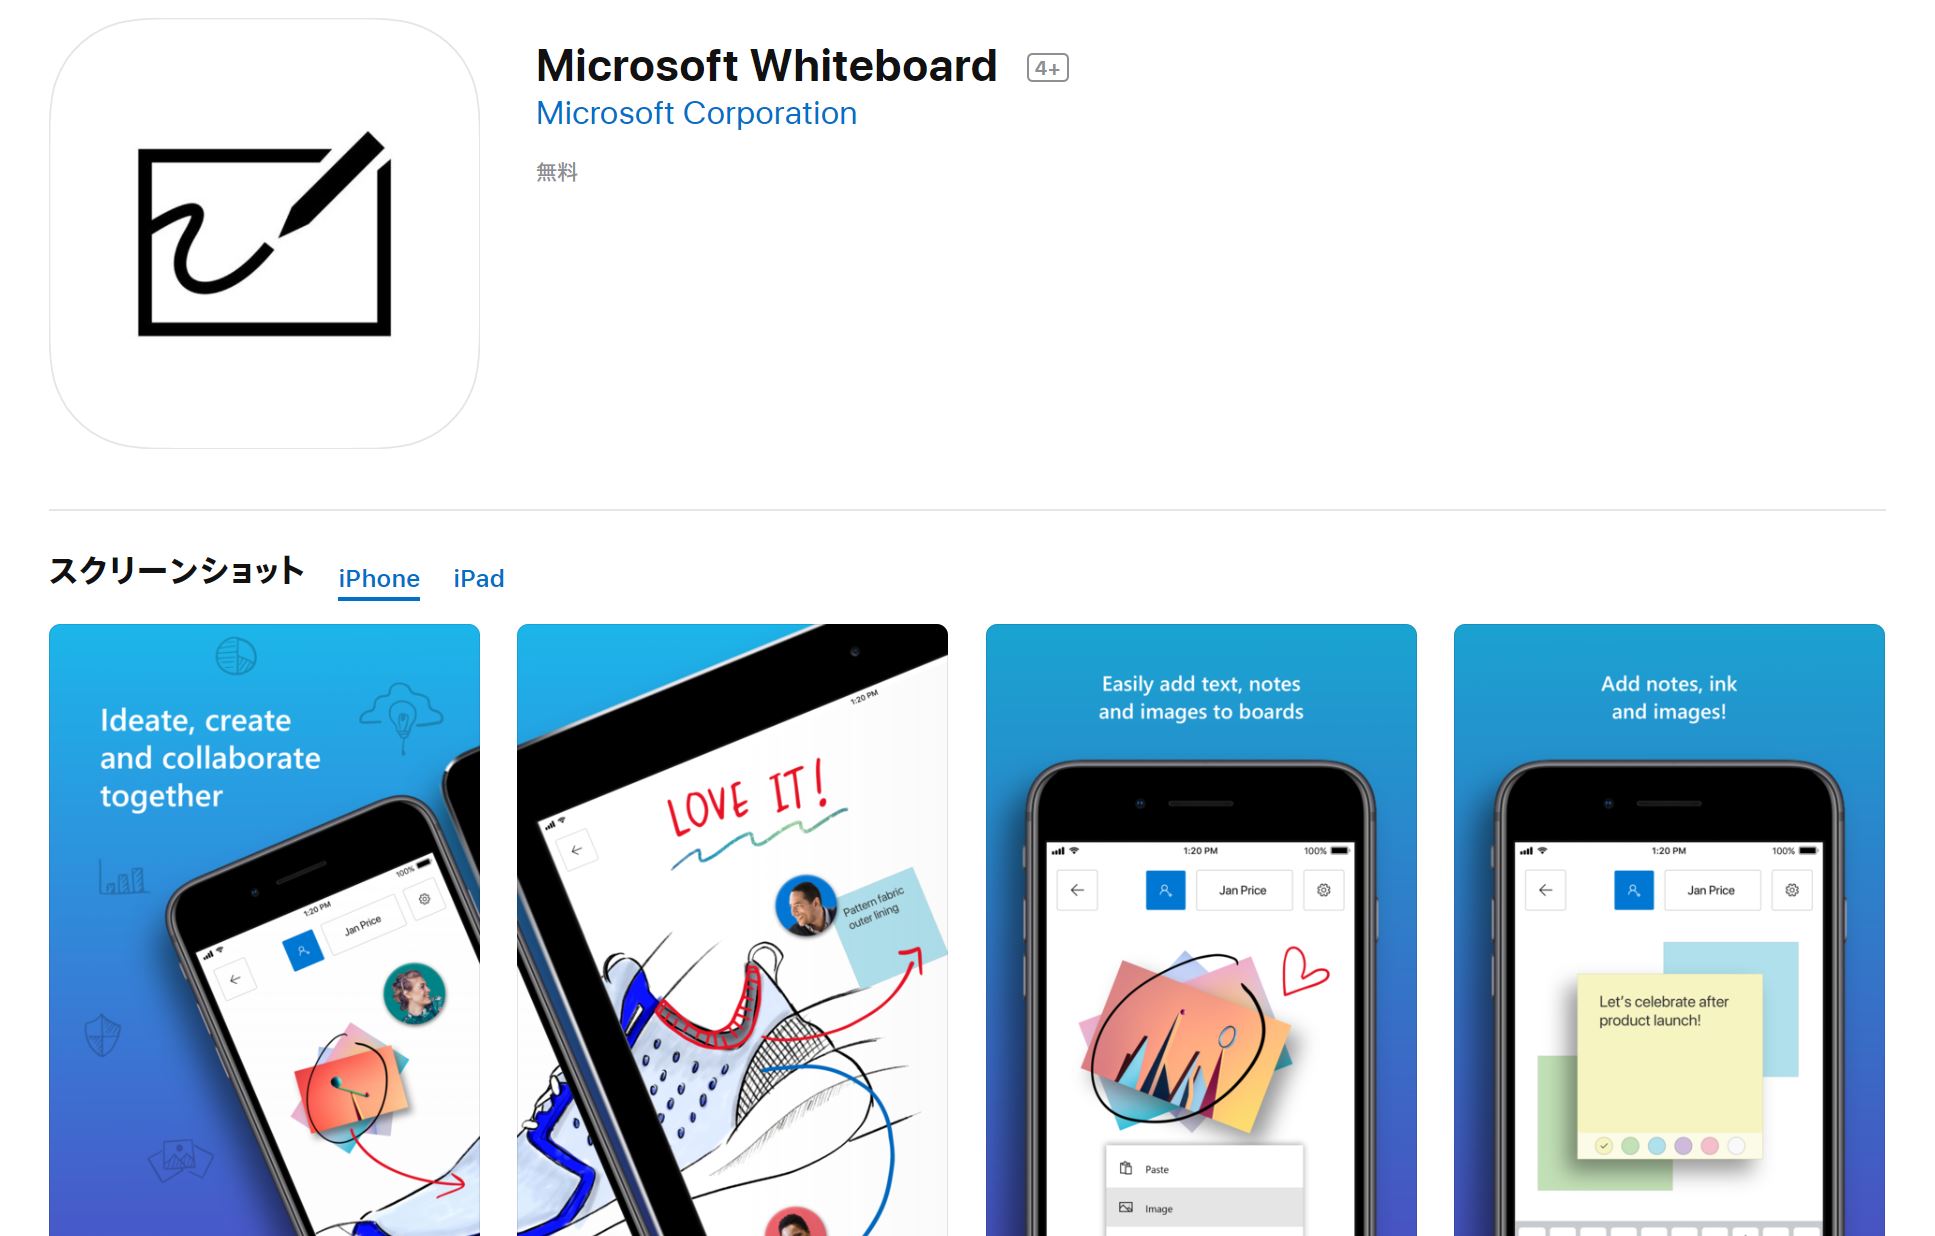  App StoréuMicrosoft Whiteboardv